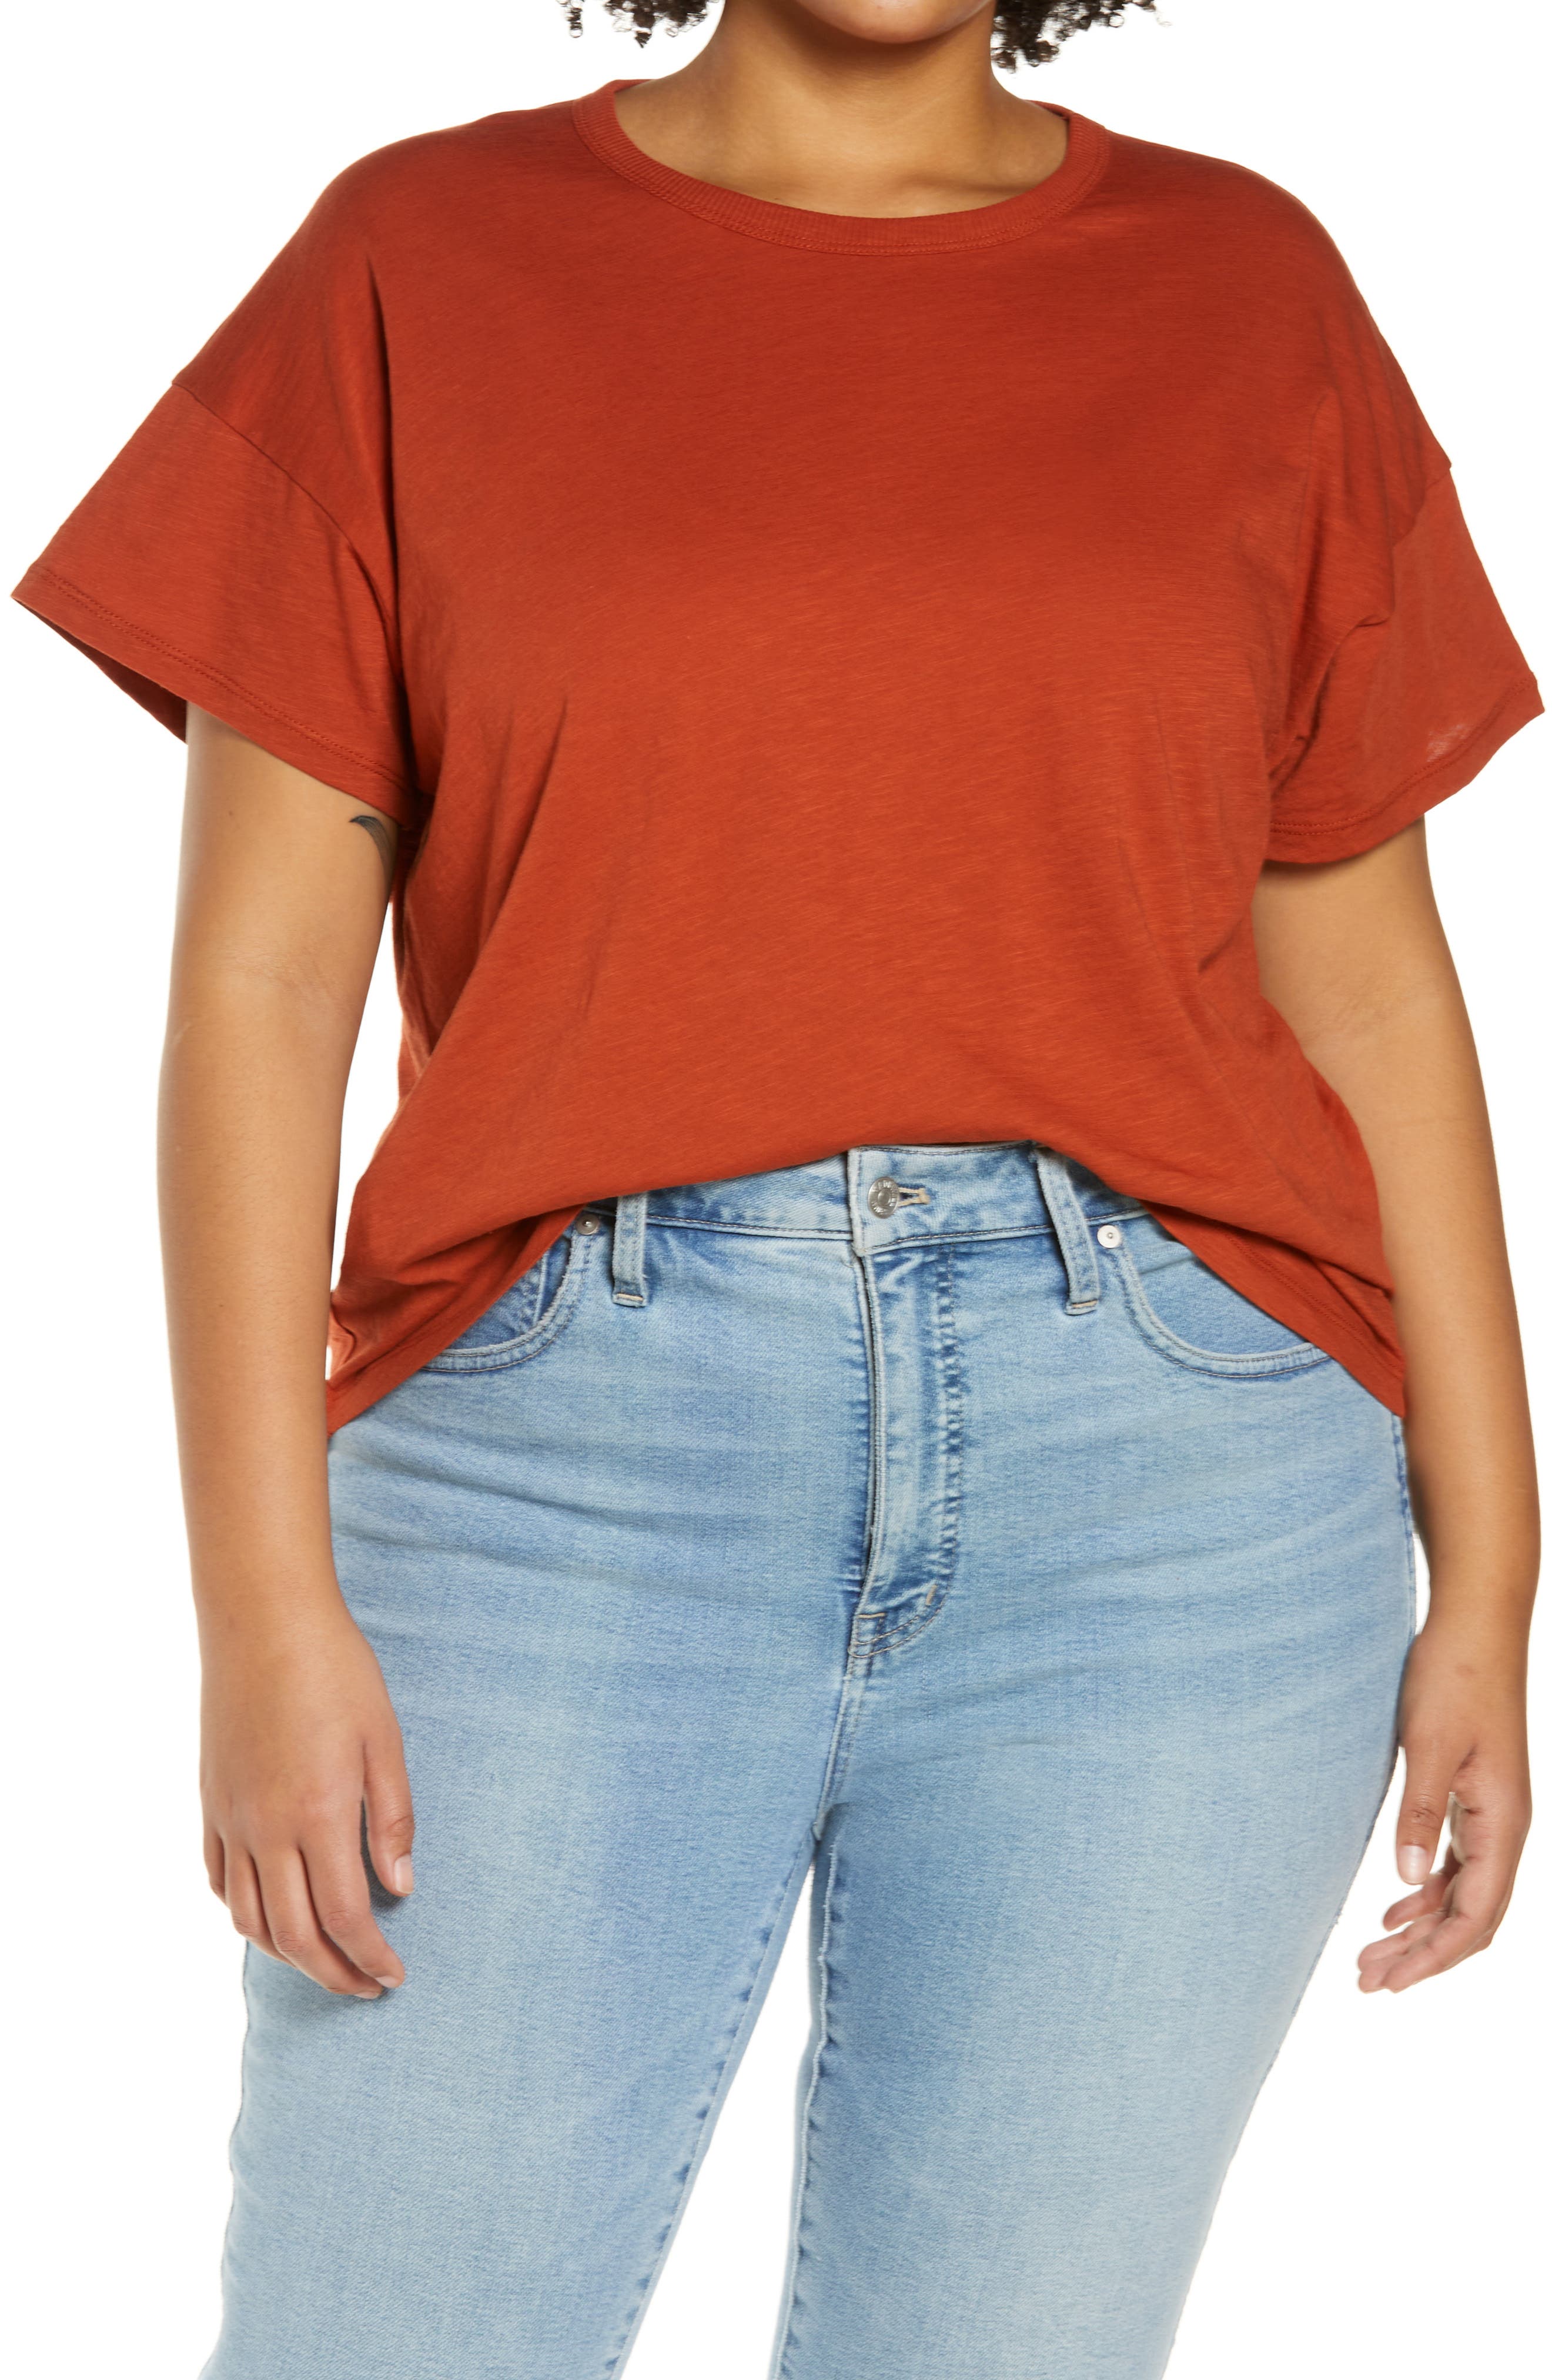 Nwt Womens Tangerine Orange Pink Blue Teal Top Shirt Short Sleeve S 2XL L M XL 